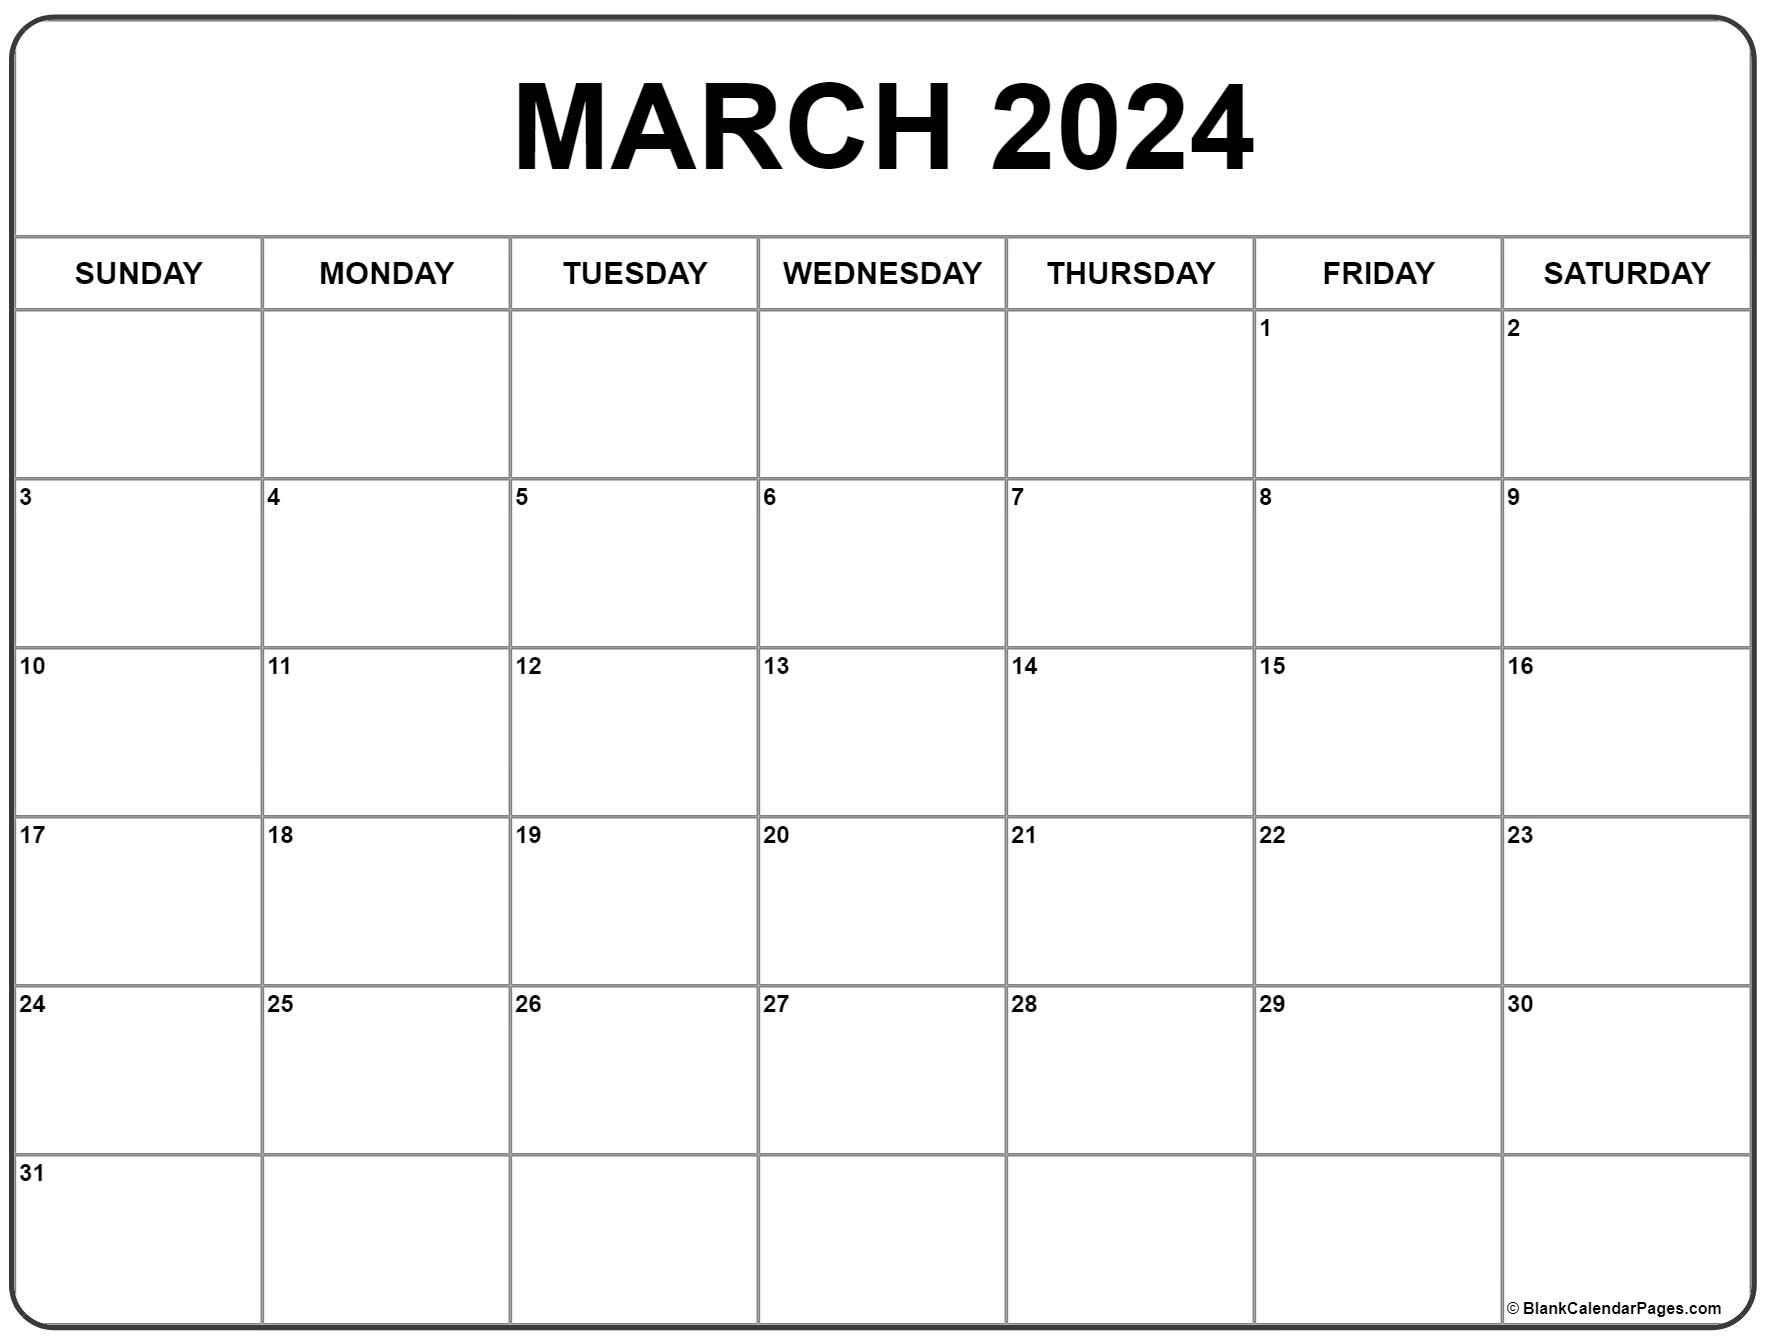 March 2024 Calendar | Free Printable Calendar for March 2024 Free Printable Calendar